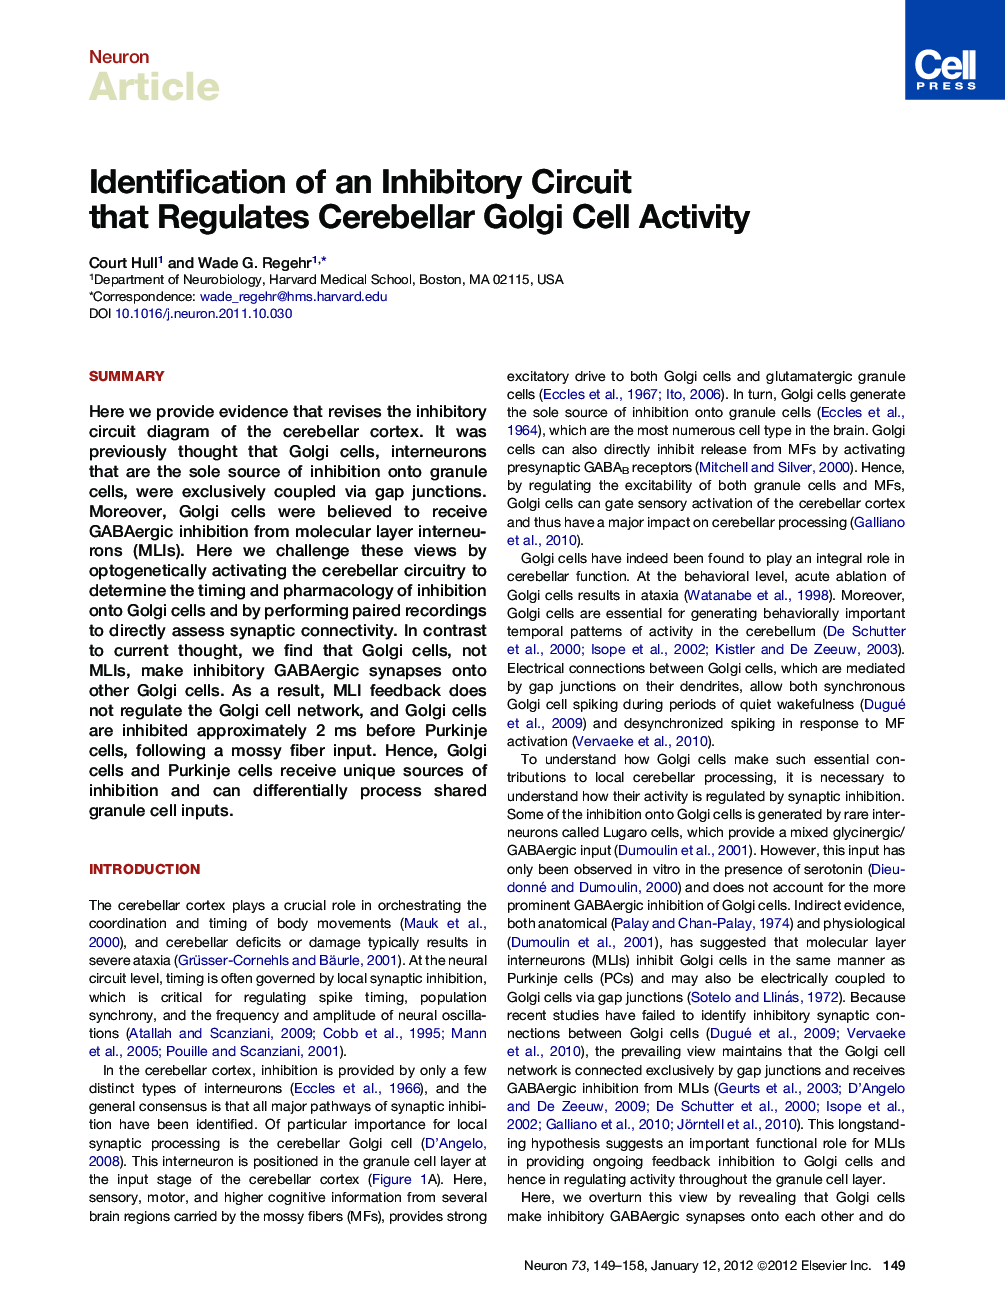 Identification of an Inhibitory Circuit that Regulates Cerebellar Golgi Cell Activity